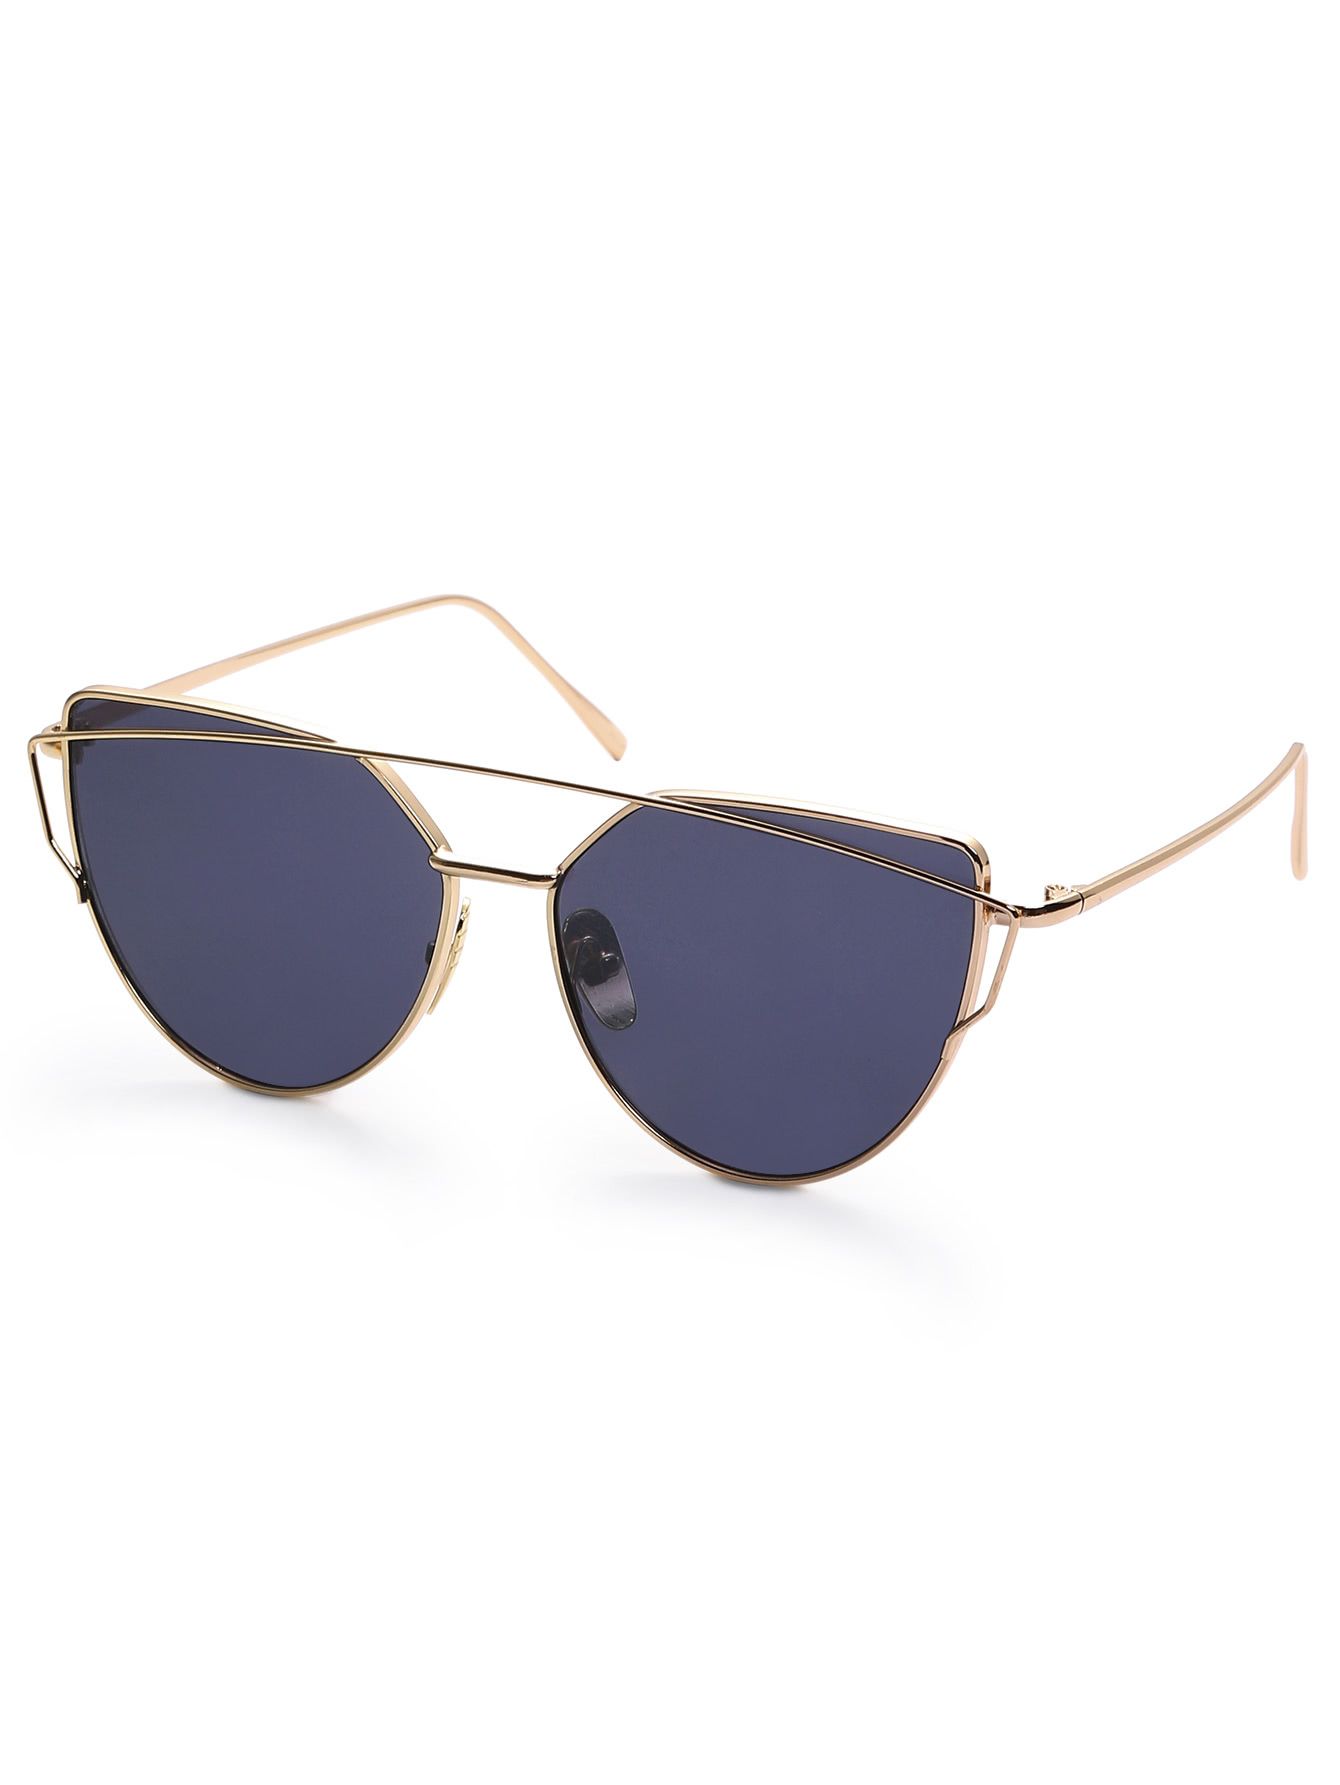 Gold Frame Black Reflective Lenses Sunglasses | SHEIN